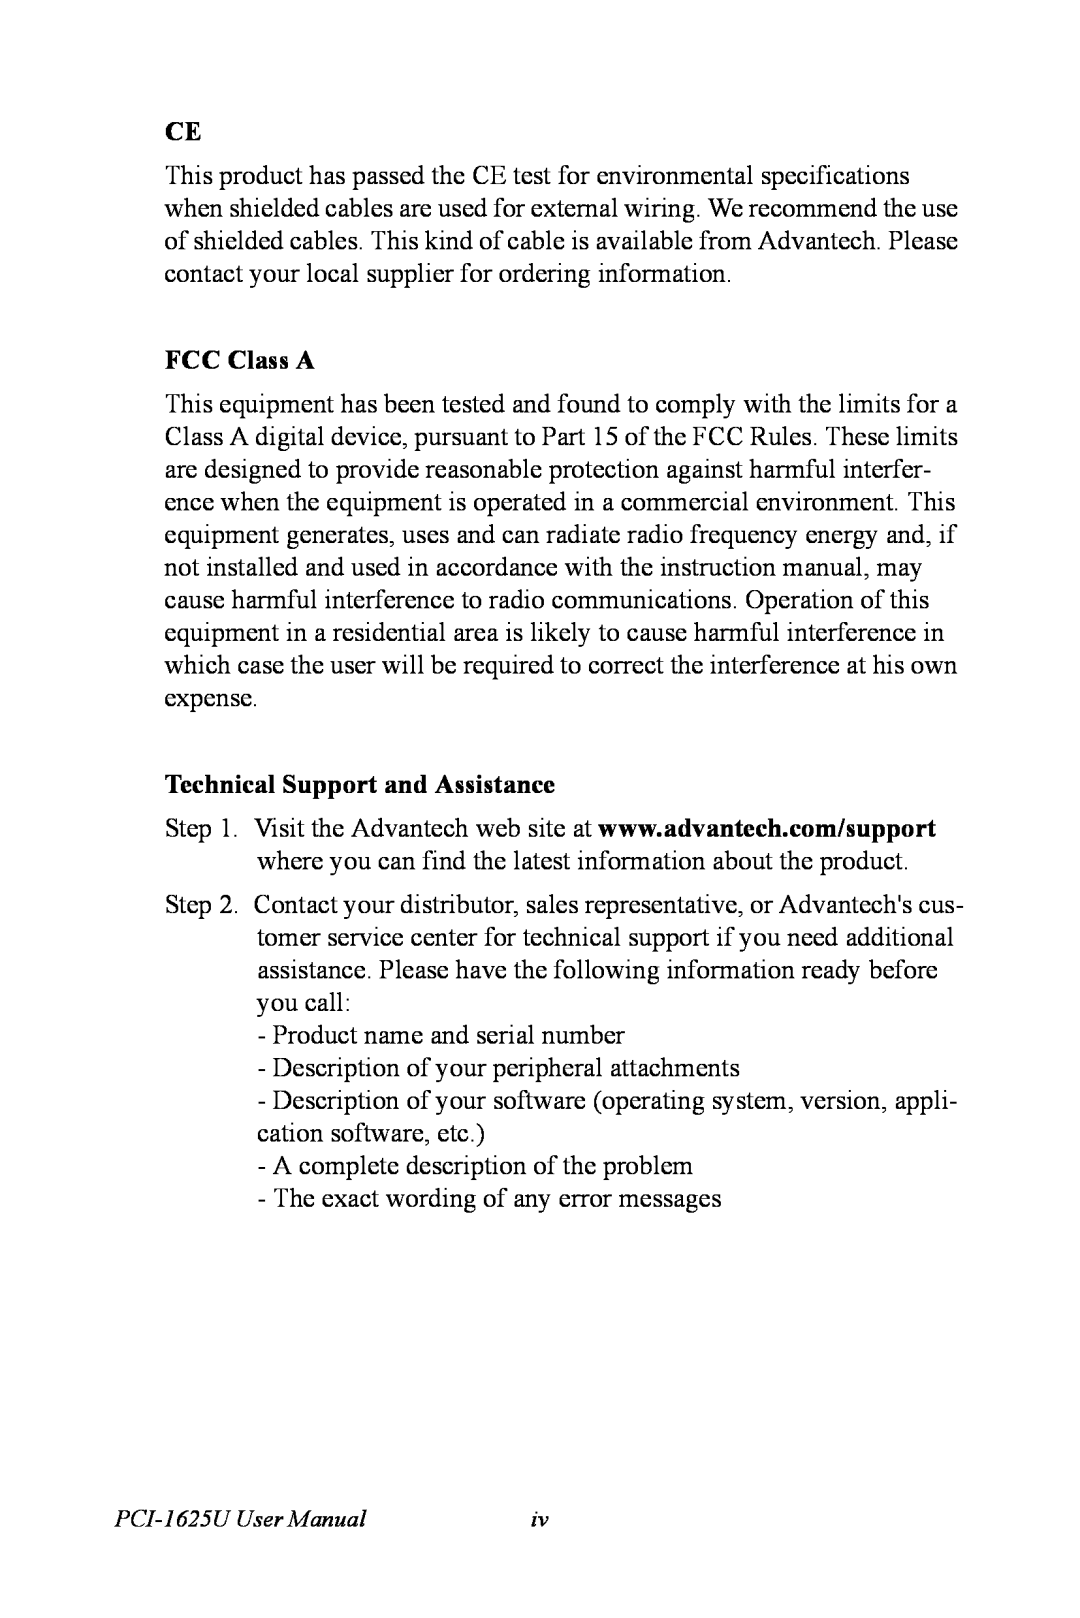 Advantech PCI-1625U user manual FCC Class A, Technical Support and Assistance 